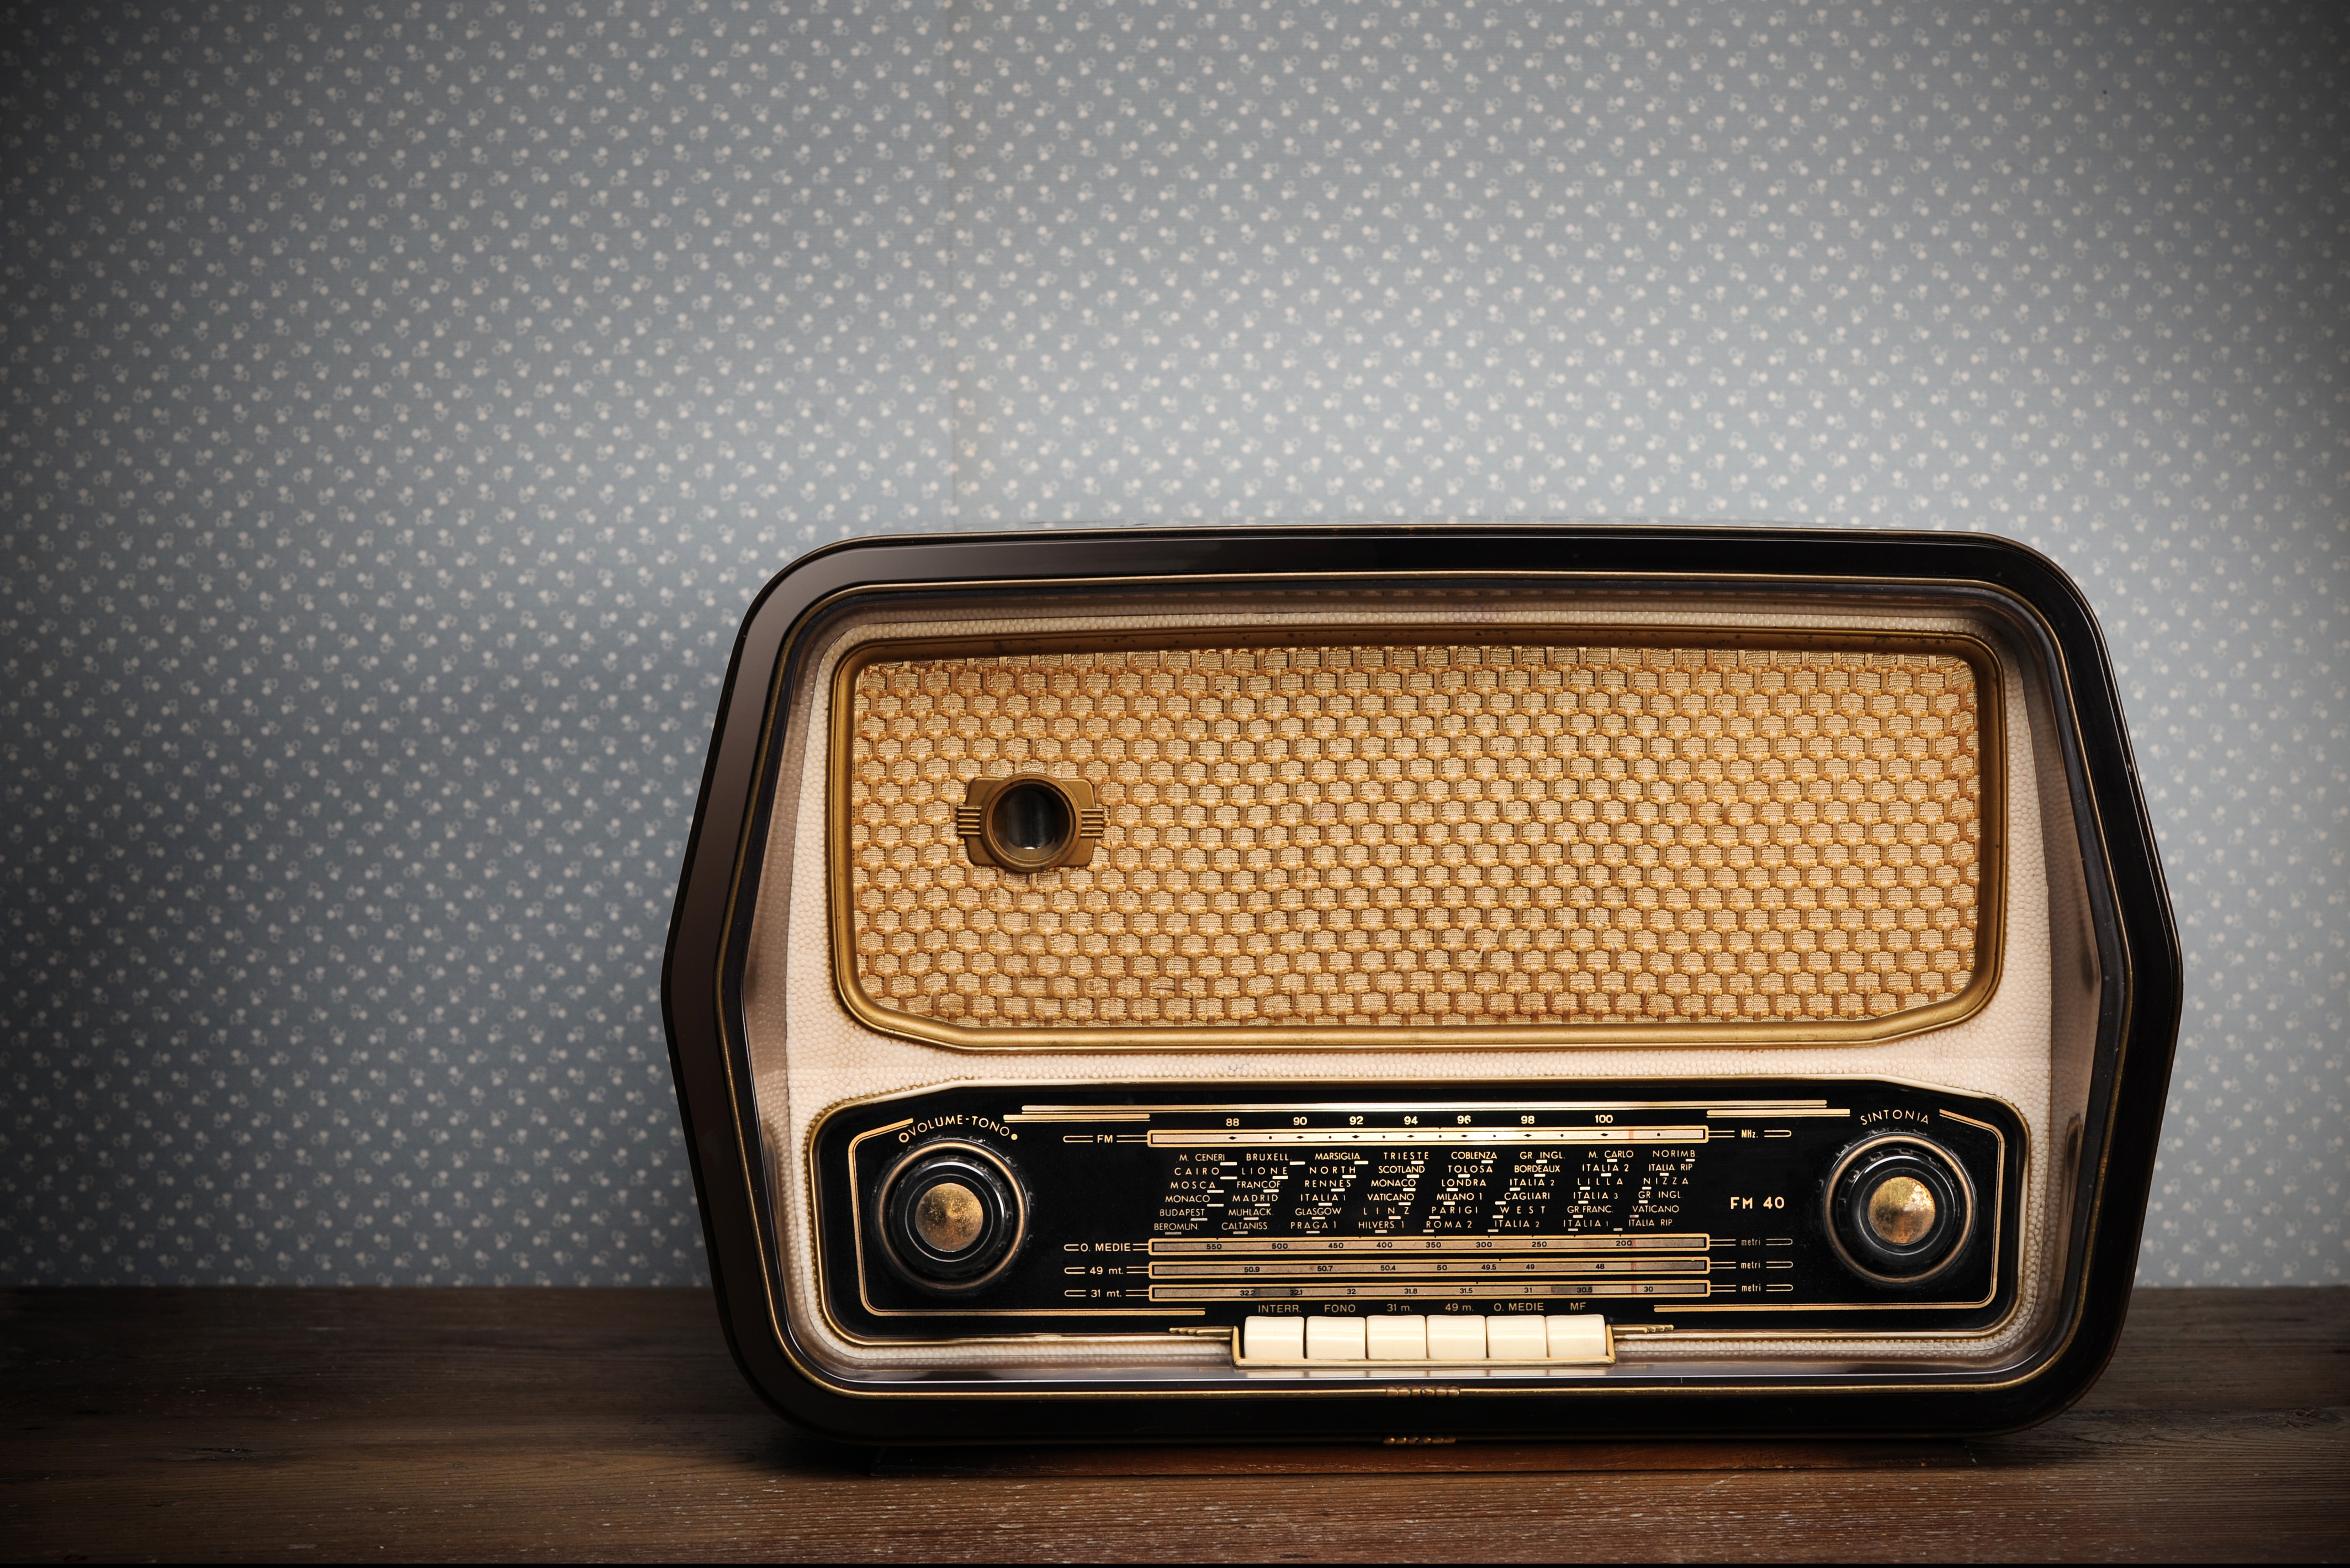 Rad ii. Радио. Старый радиоприемник. Радиоприемник в стиле ретро. Современные ретро радиоприемники.